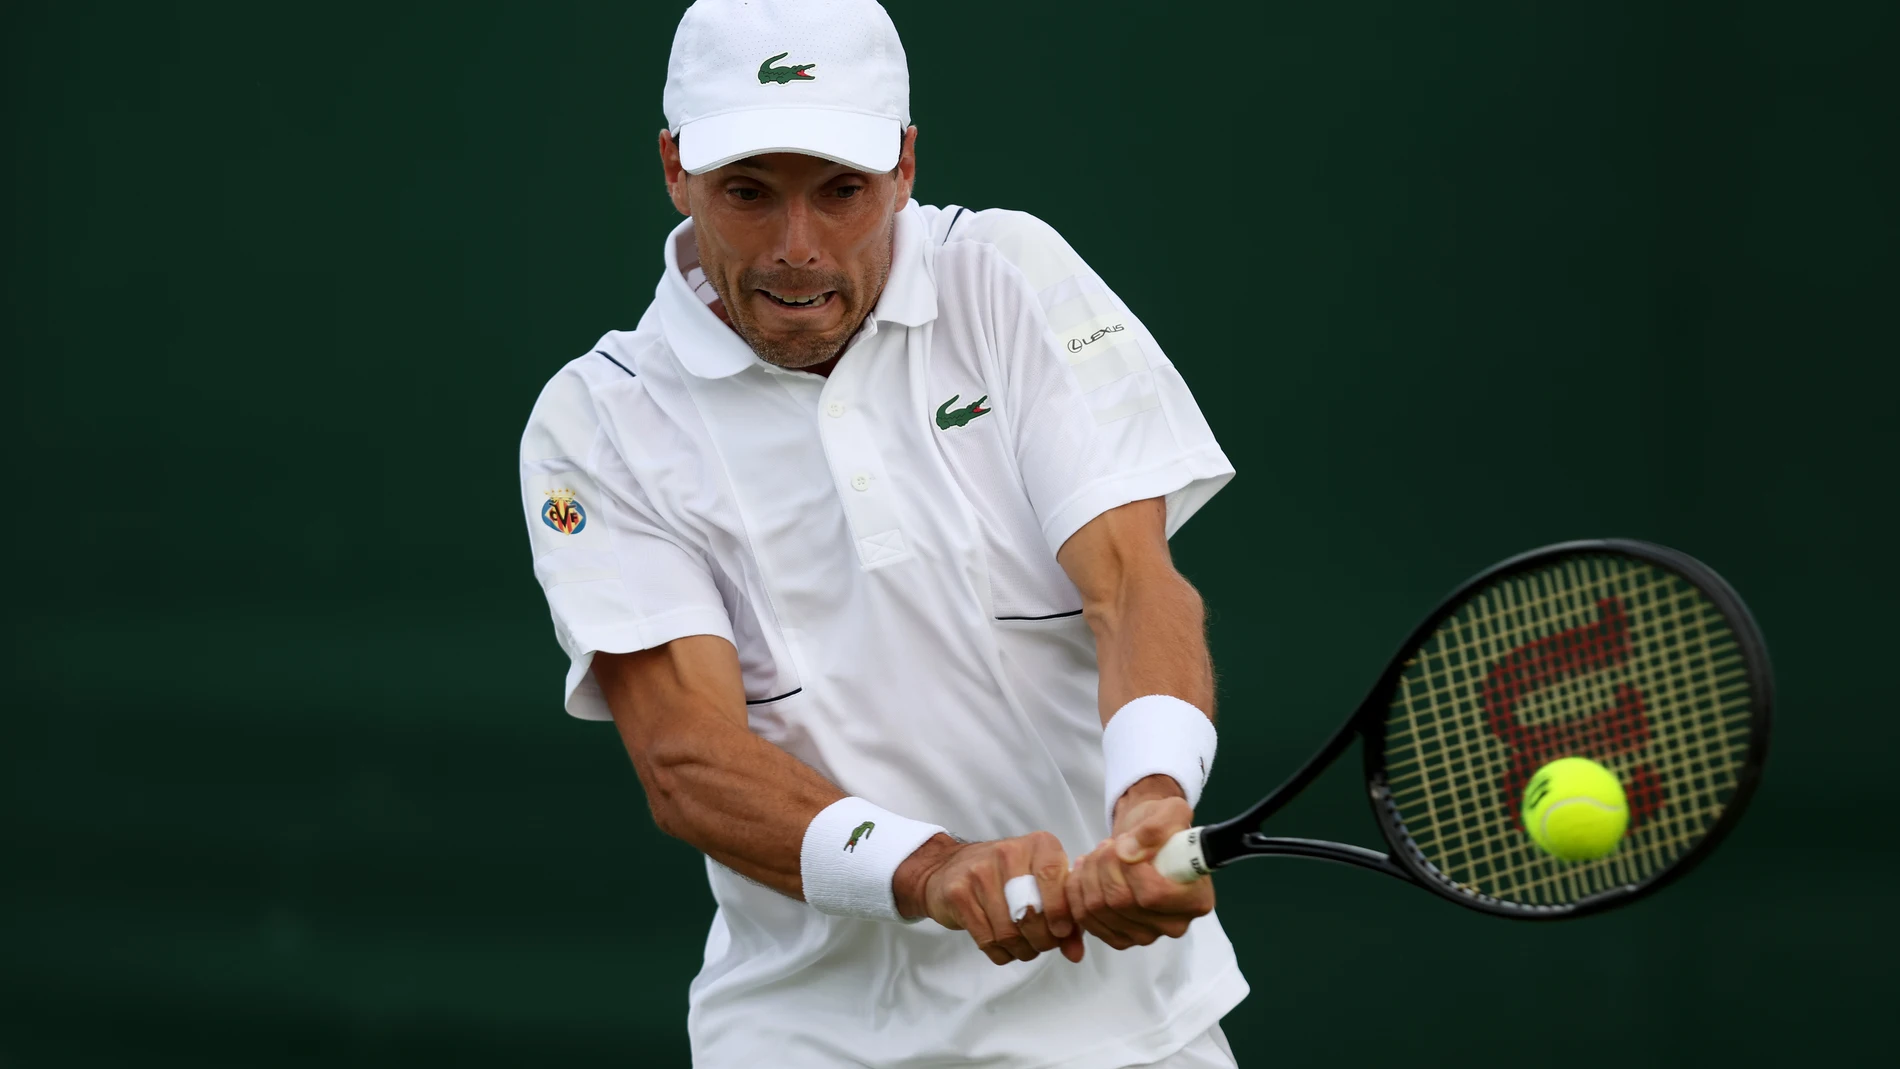 Roberto Bautista abandona Wimbledon